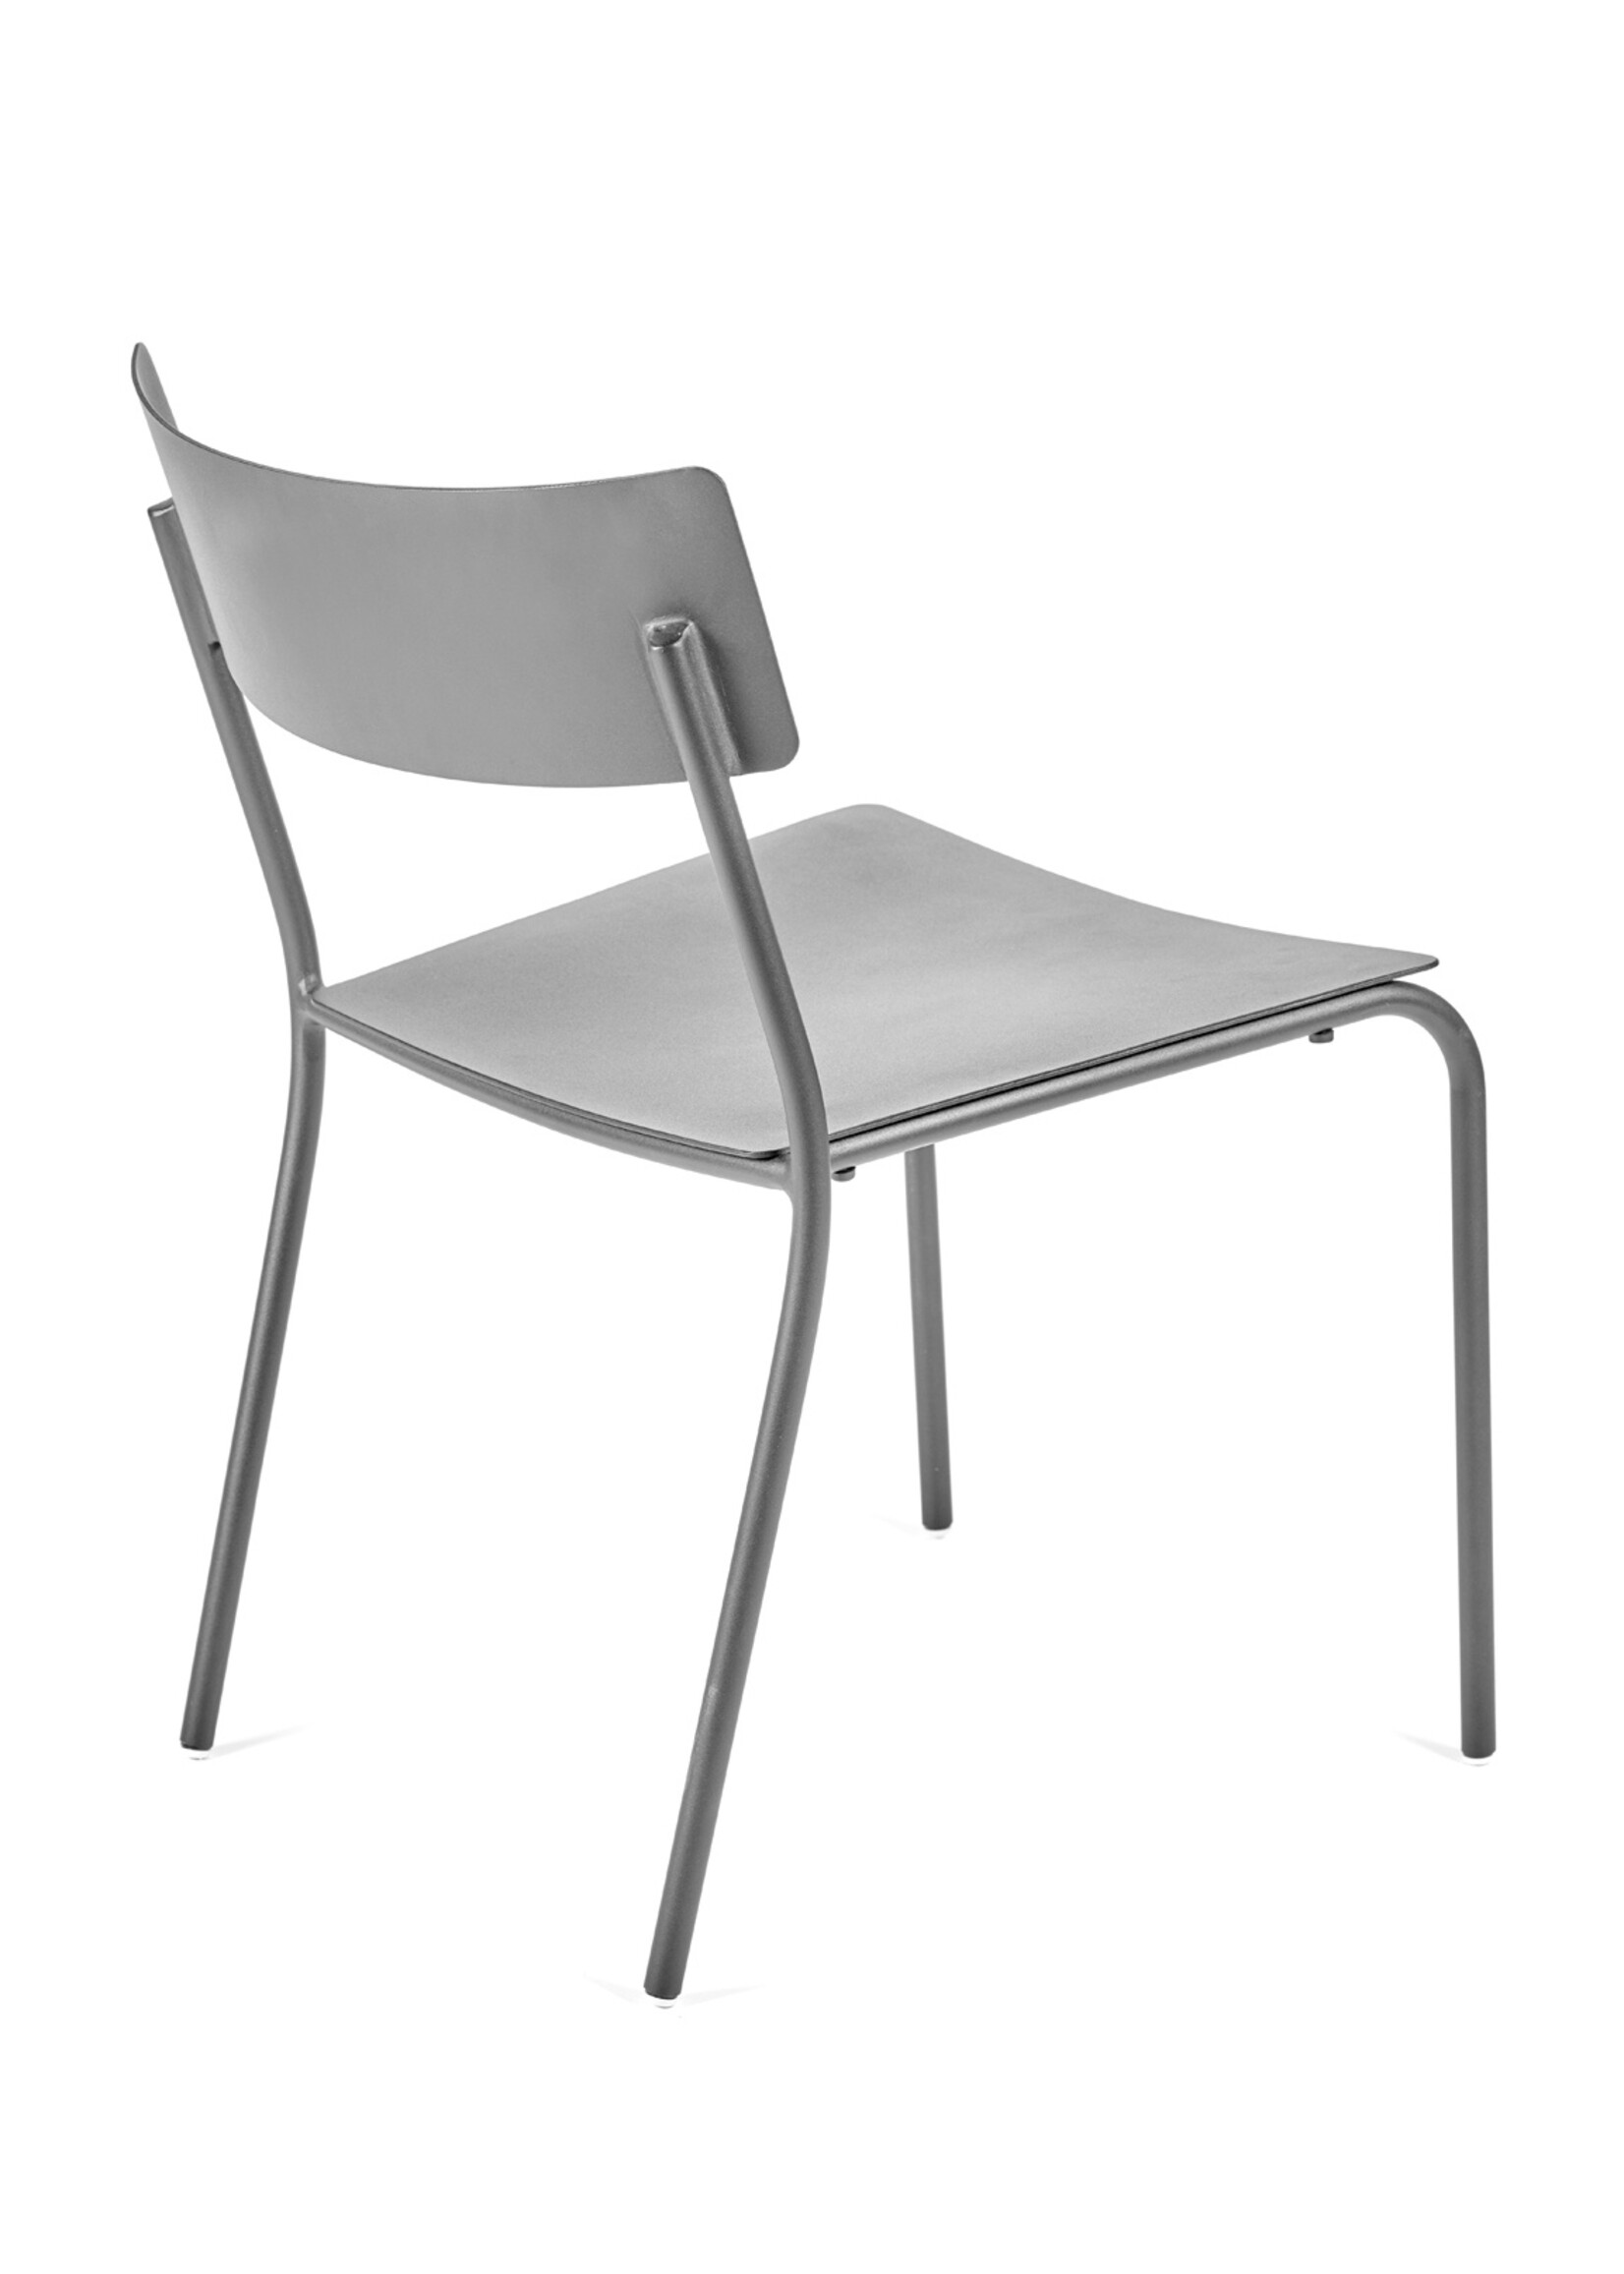 Serax August - Outdoor -  Chair - Grey